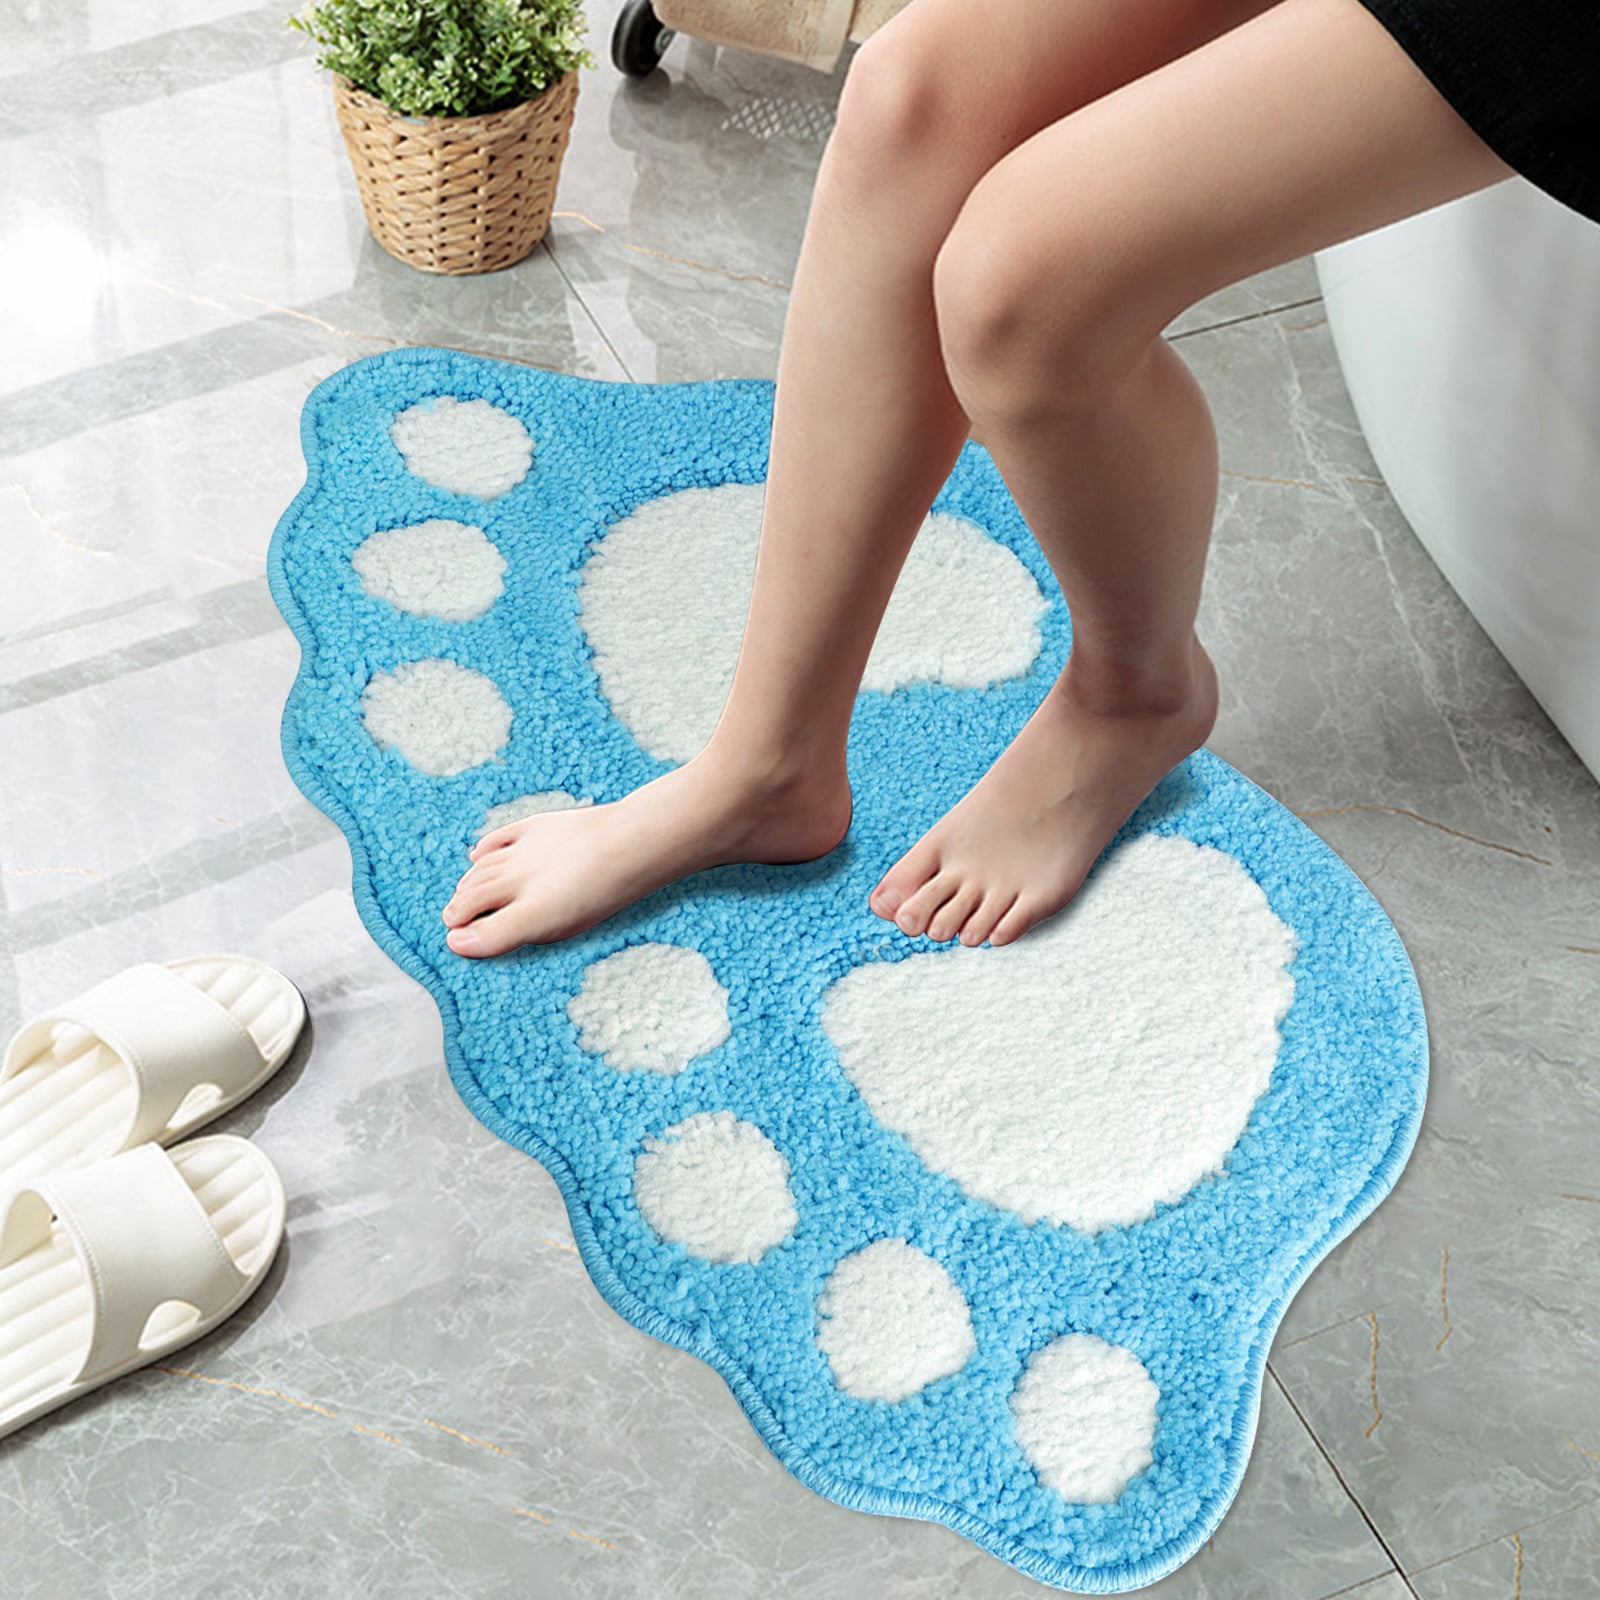 Shaggy Microfibre Bathroom Shower Bath Mat Rug Carpet Non-Slip Backing 60x40cm 